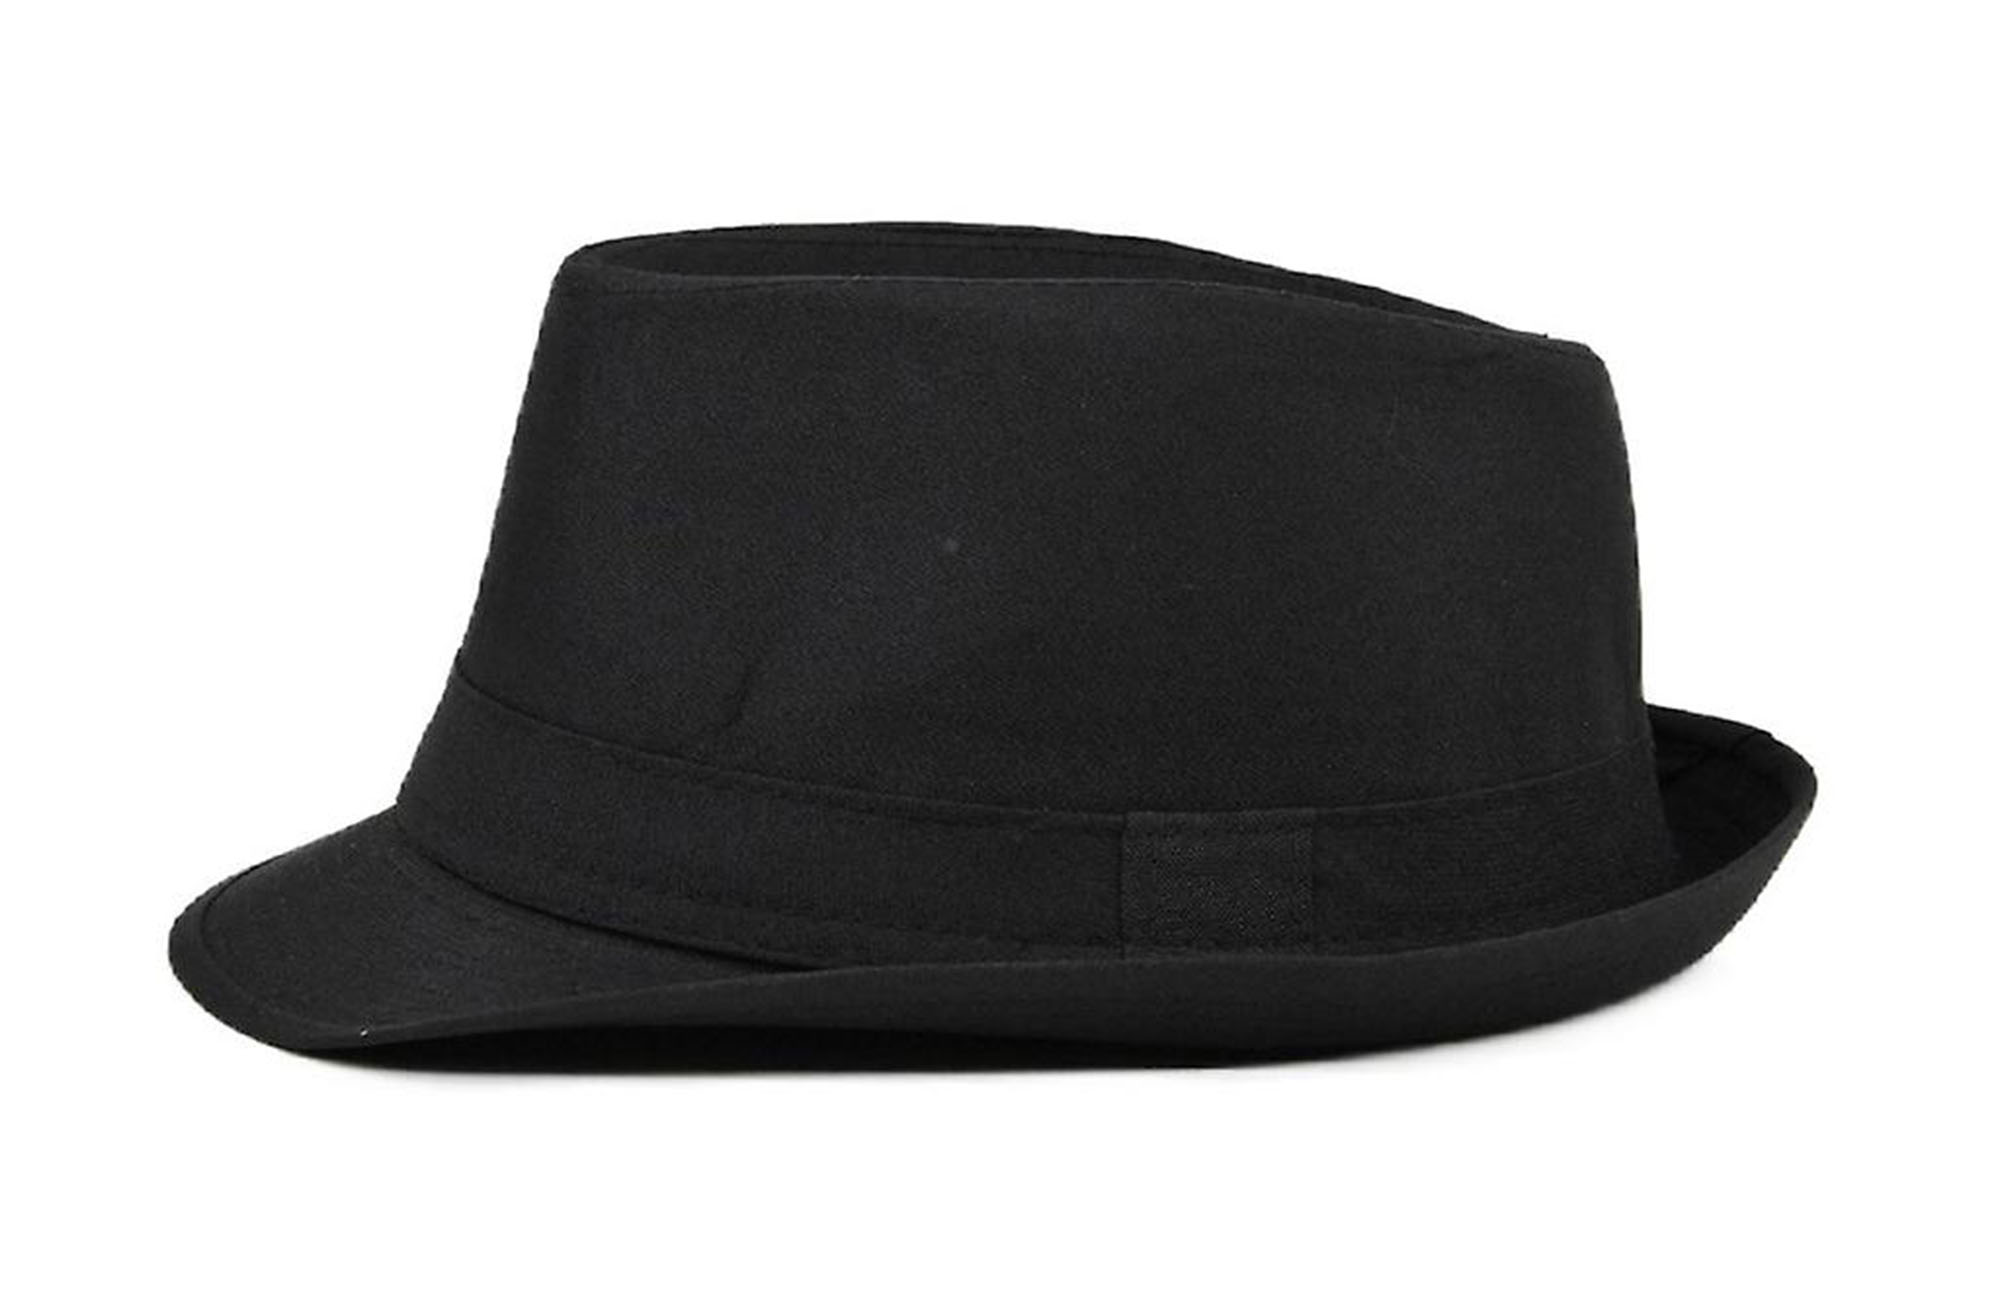 Çocuk Boy Siyah Kumaş Fötr Şapka Gösteri Şapkası Michael Jackson Şapkası 54 No (CLZ)